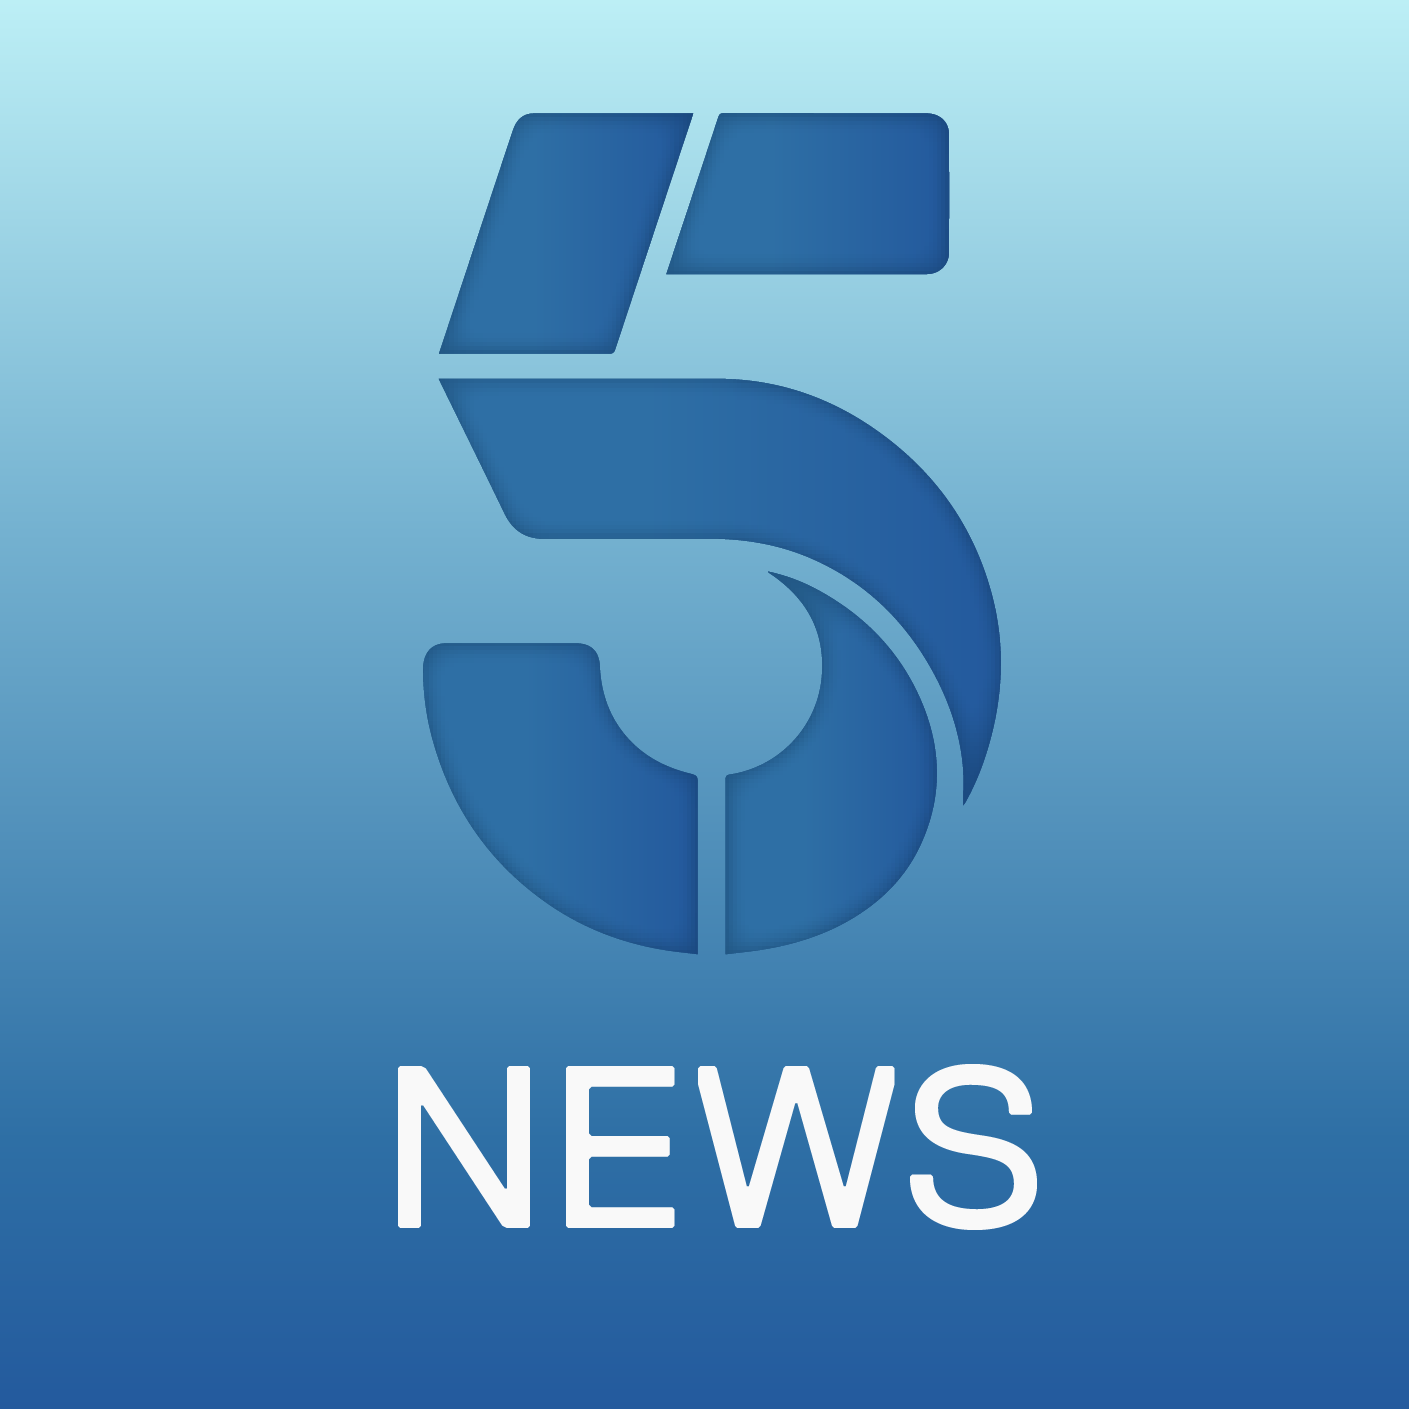 5 News logo